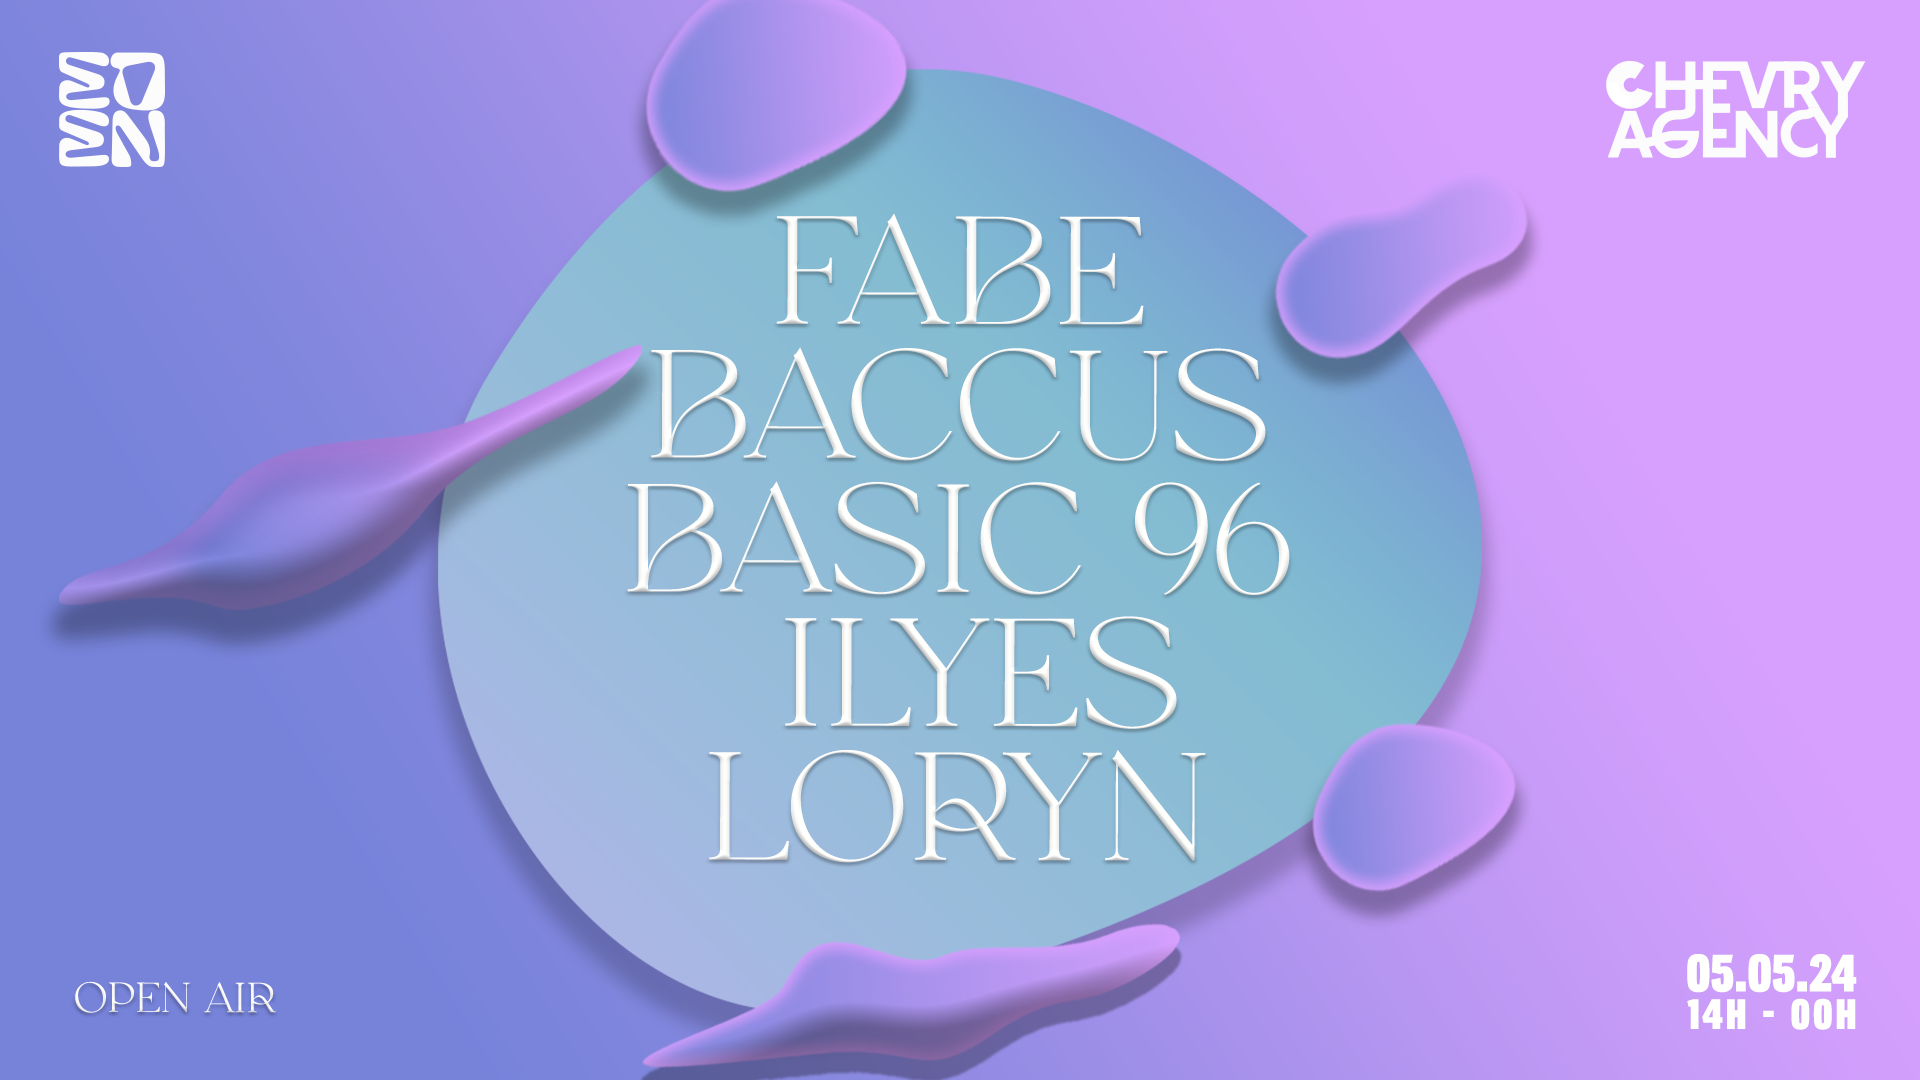 Chevry Agency x Eden: Fabe, Baccus, Basic 96, Loryn - フライヤー表